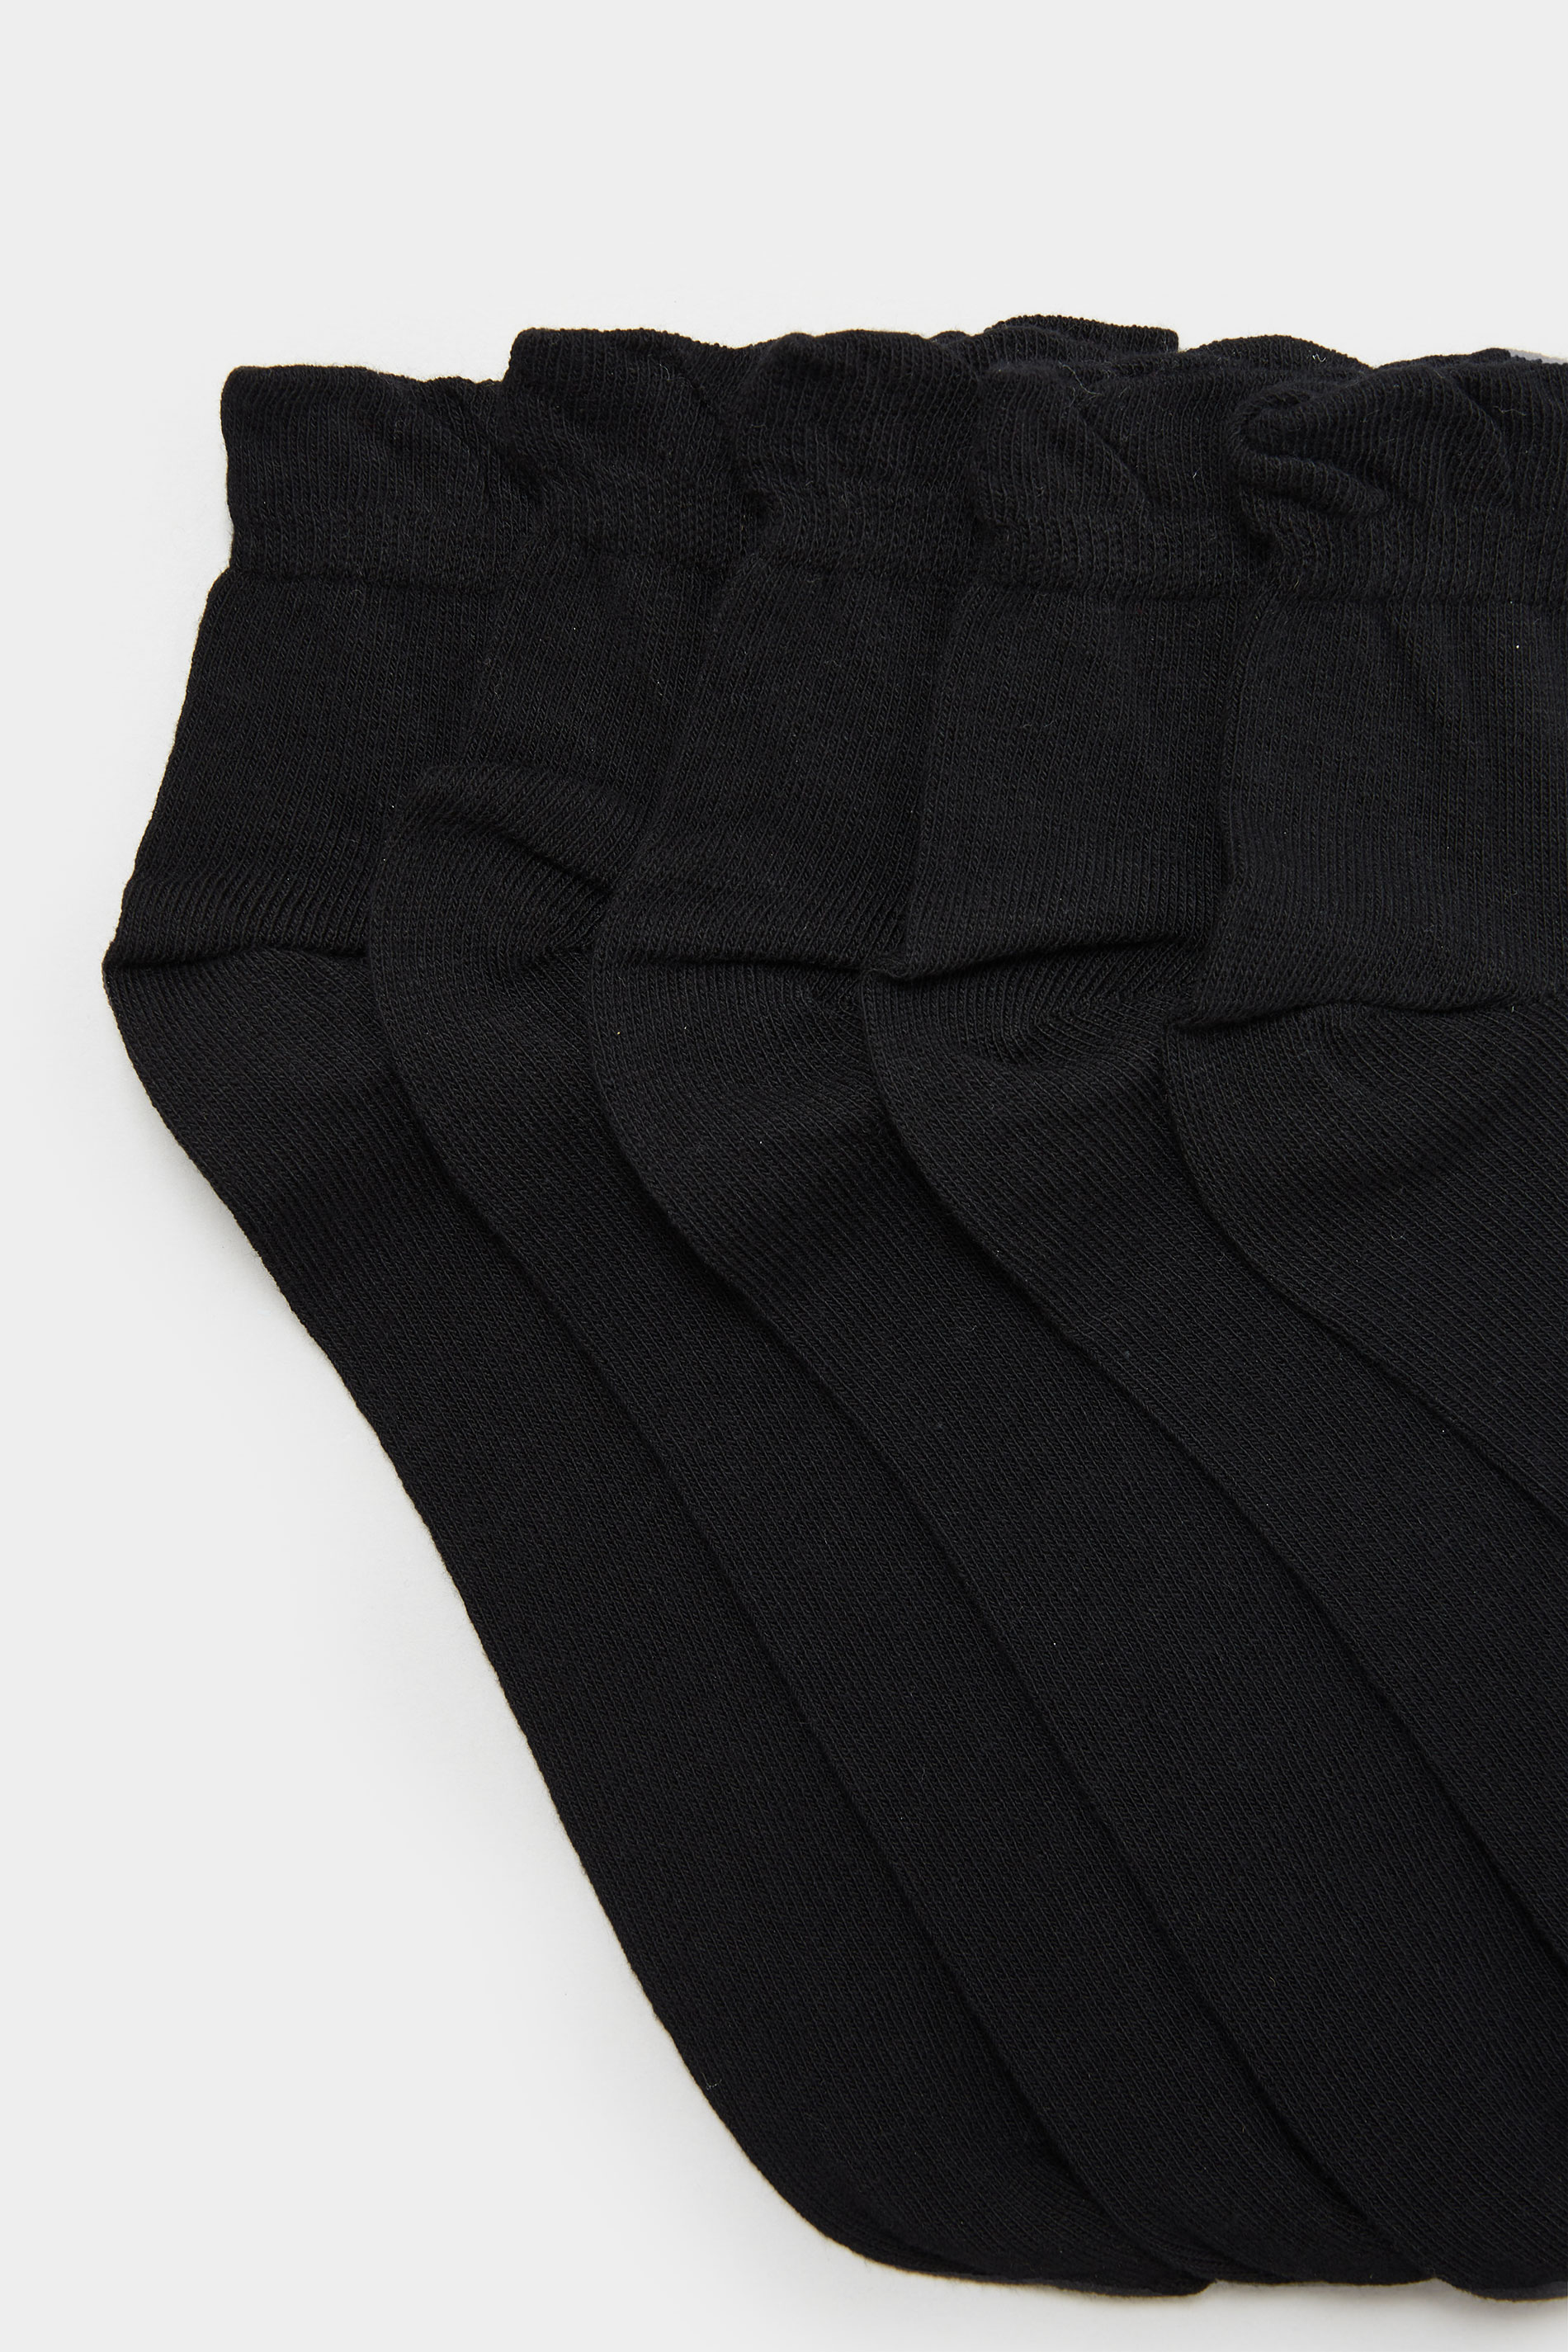 5 PACK Black Trainer Liner Socks | Yours Clothing 3